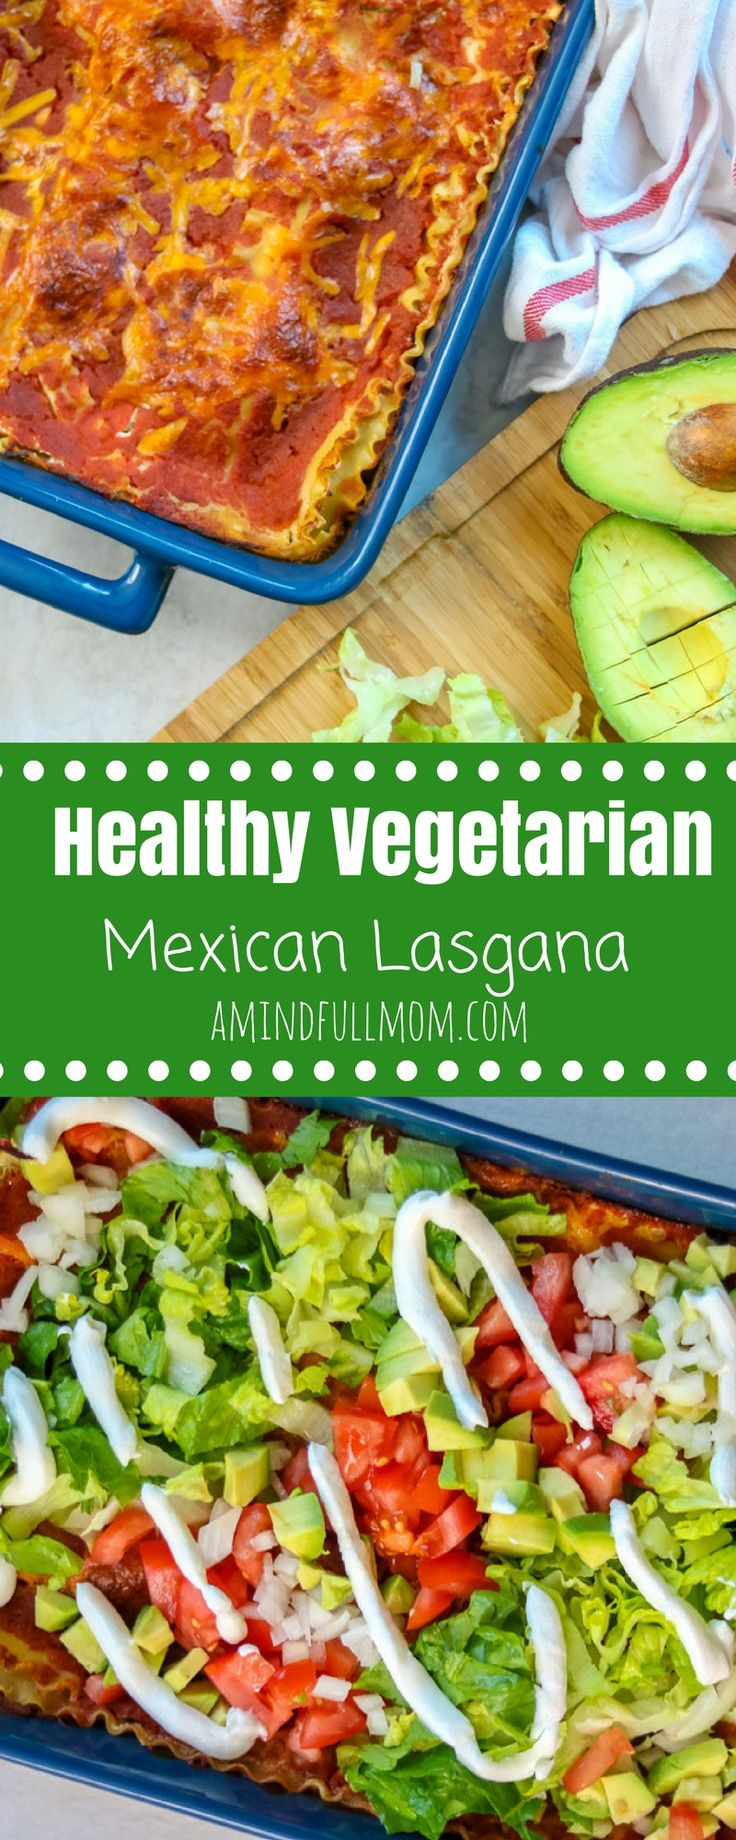 Healthy Vegetarian Mexican Recipes
 Healthy Ve arian Mexican Lasagna An easy tex mex